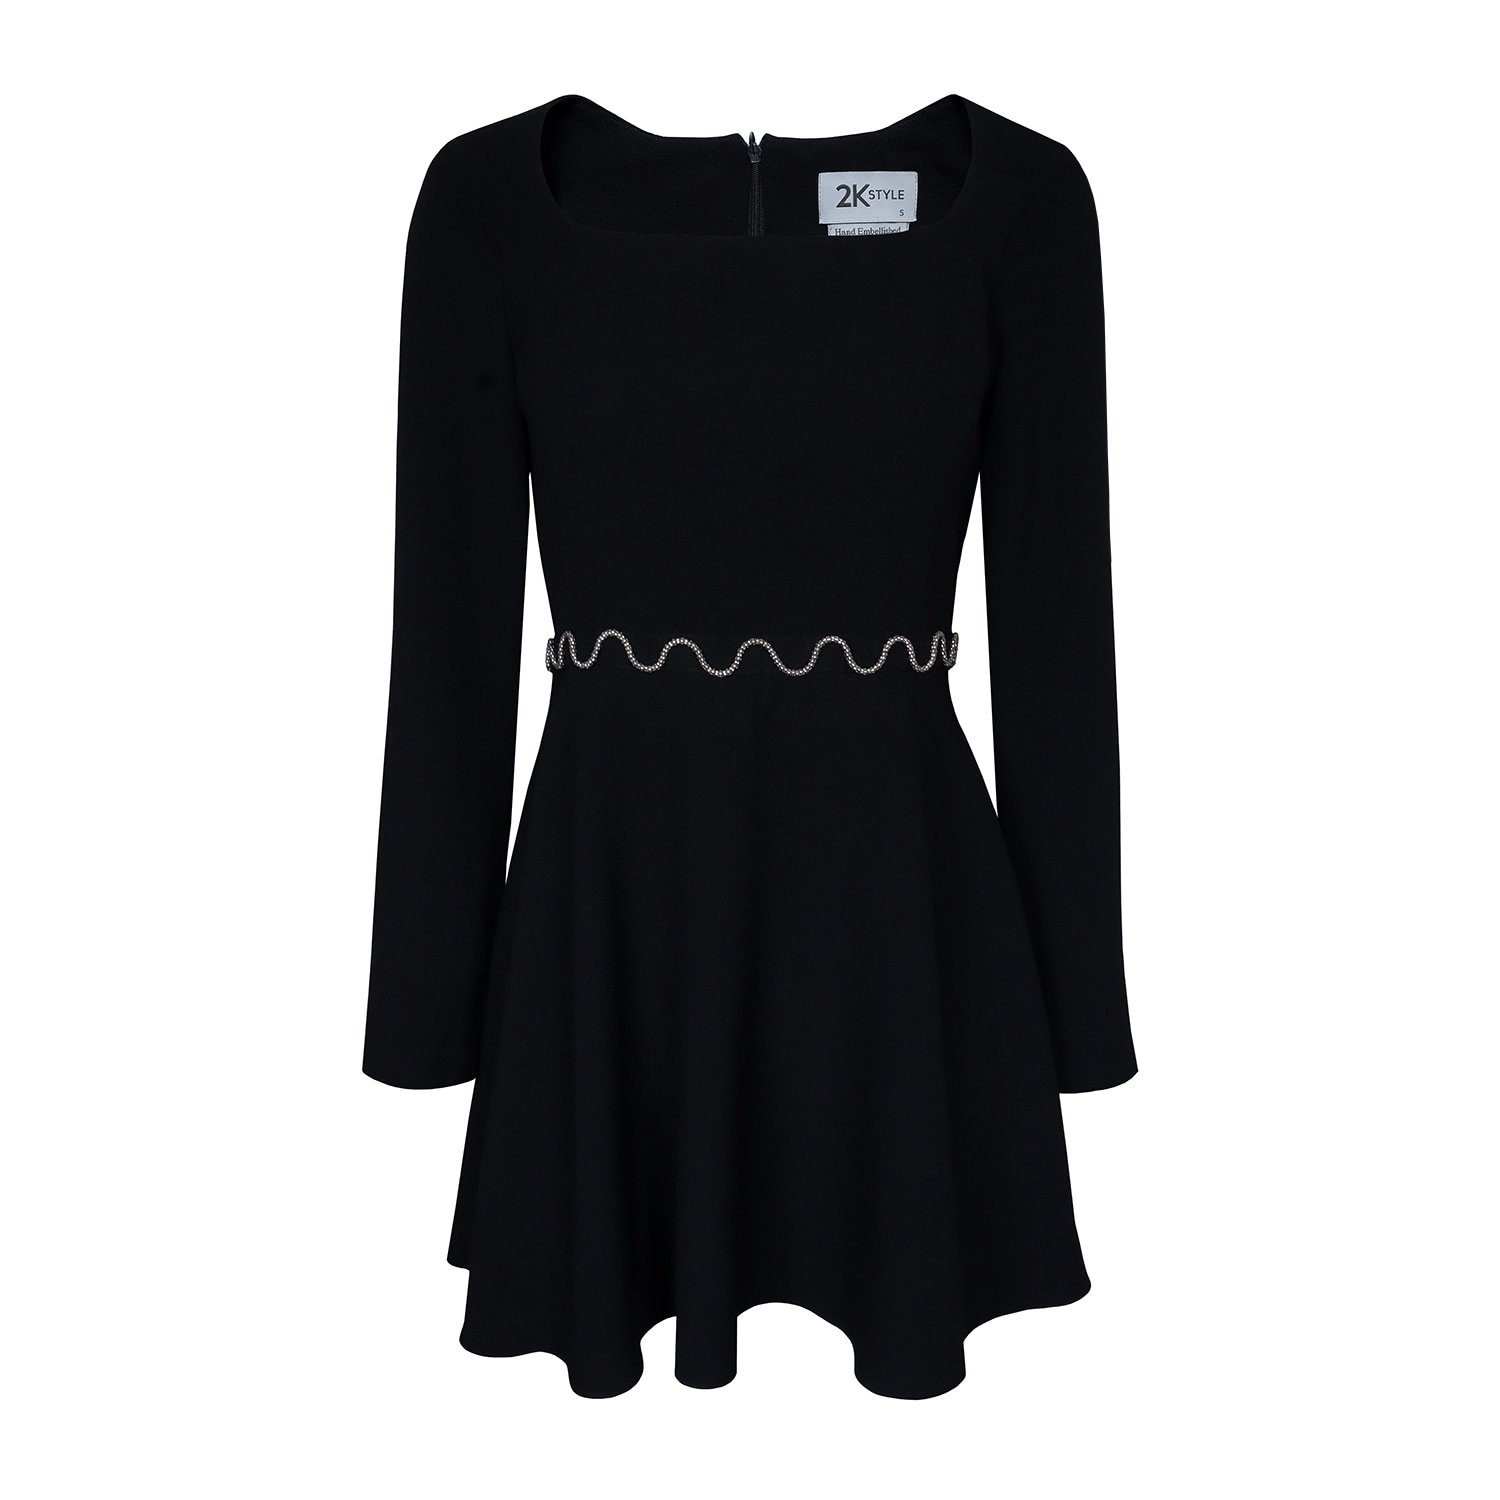 Women’s Brigitte Chain-Embellished Crepe Mini Dress - Black Extra Small 2Kstyle